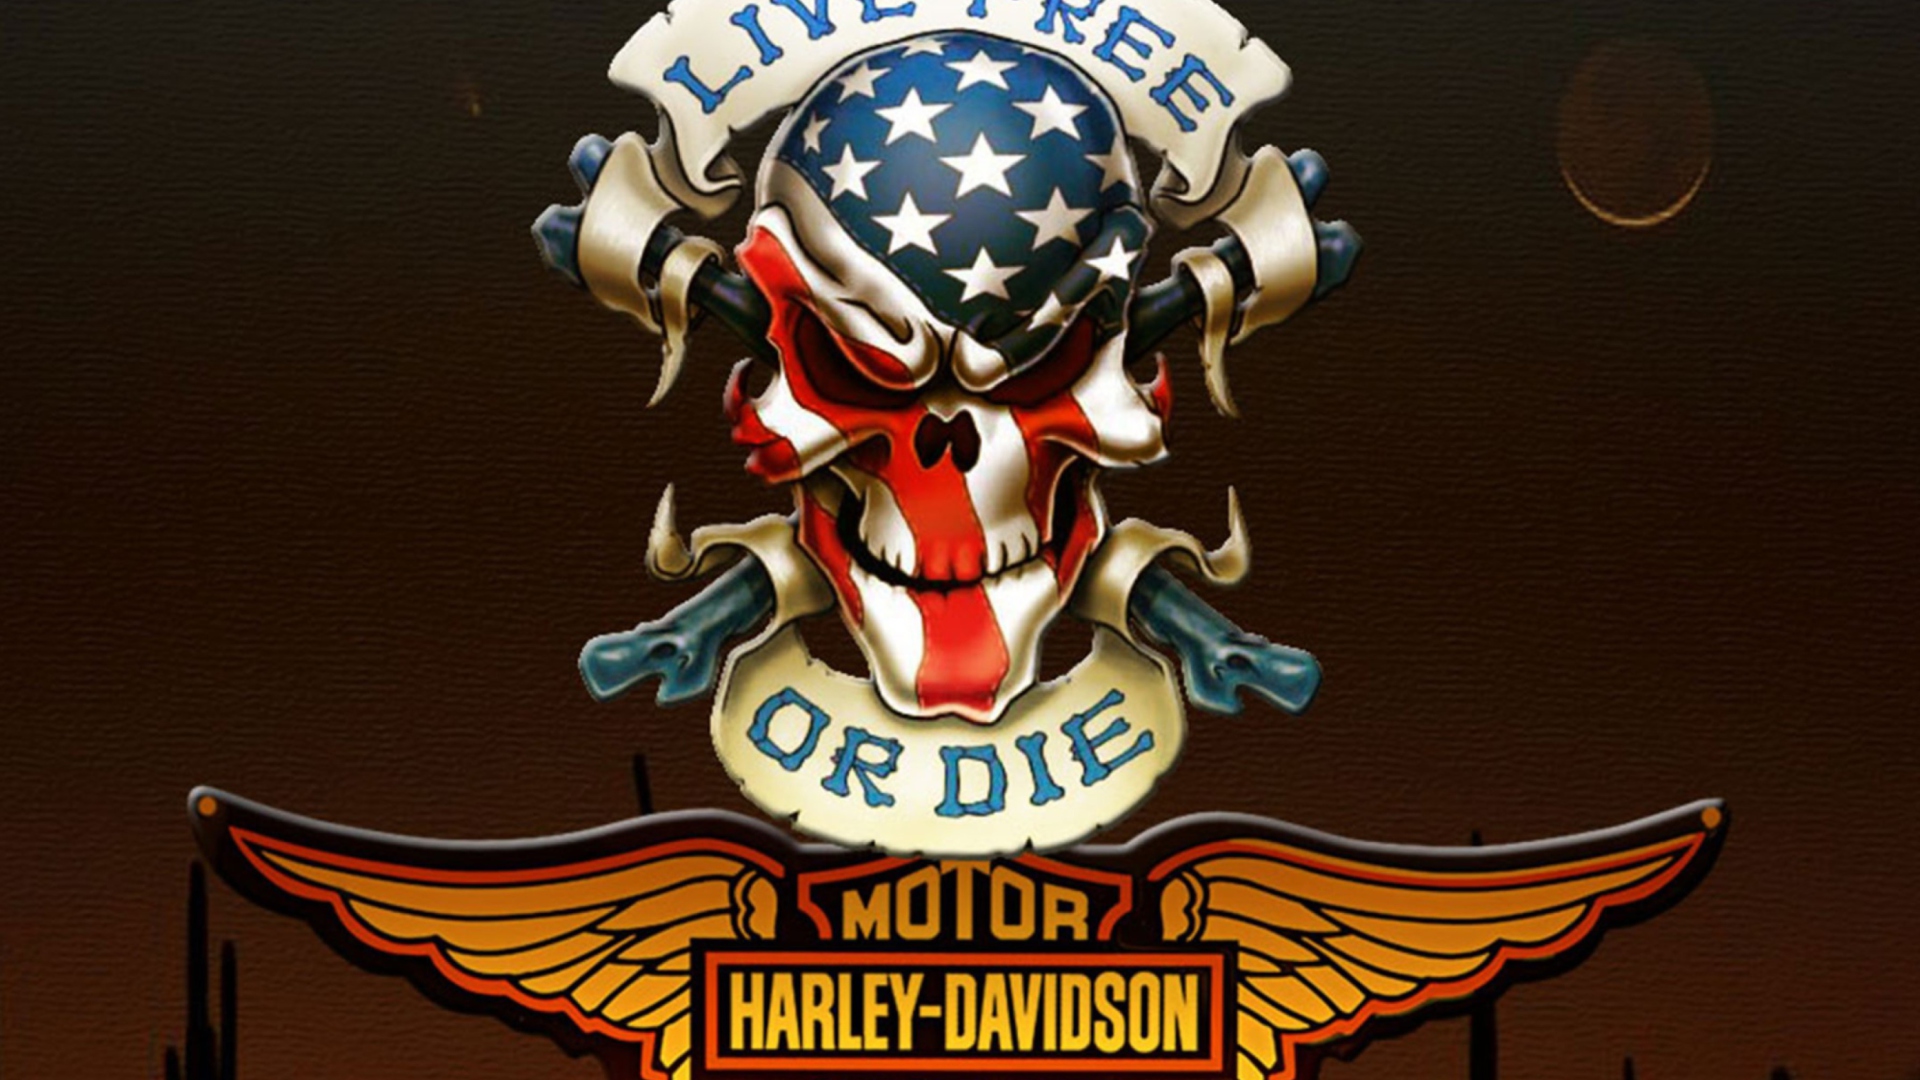 Harley Davidson wallpaper 1920x1080